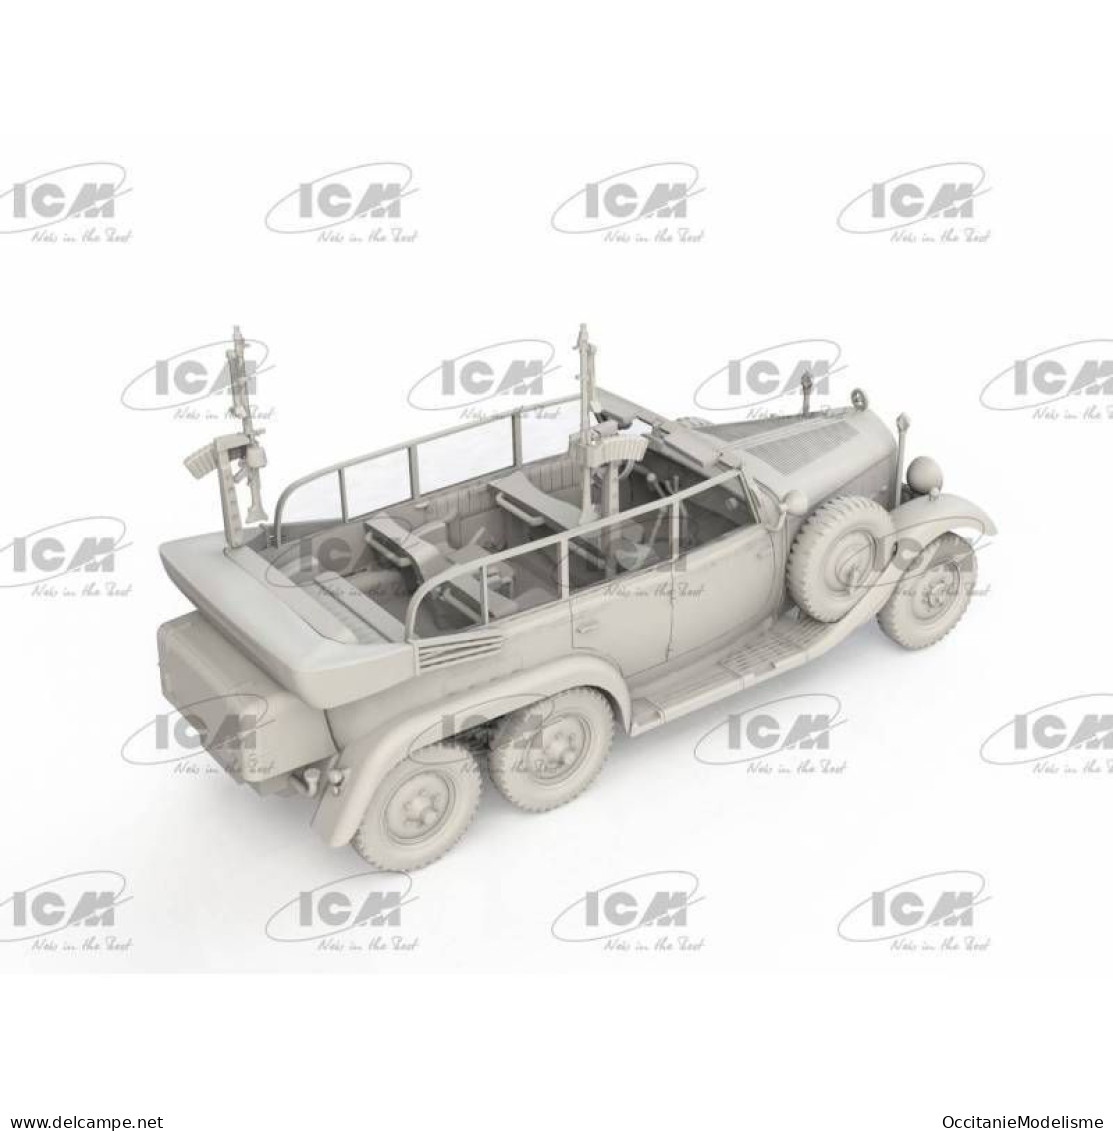 ICM - MERCEDES-BENZ TYPE G4 Partisanenwagen MG34 WWII Maquette Kit Plastique Réf. 72473 Neuf NBO 1/72 - Militär